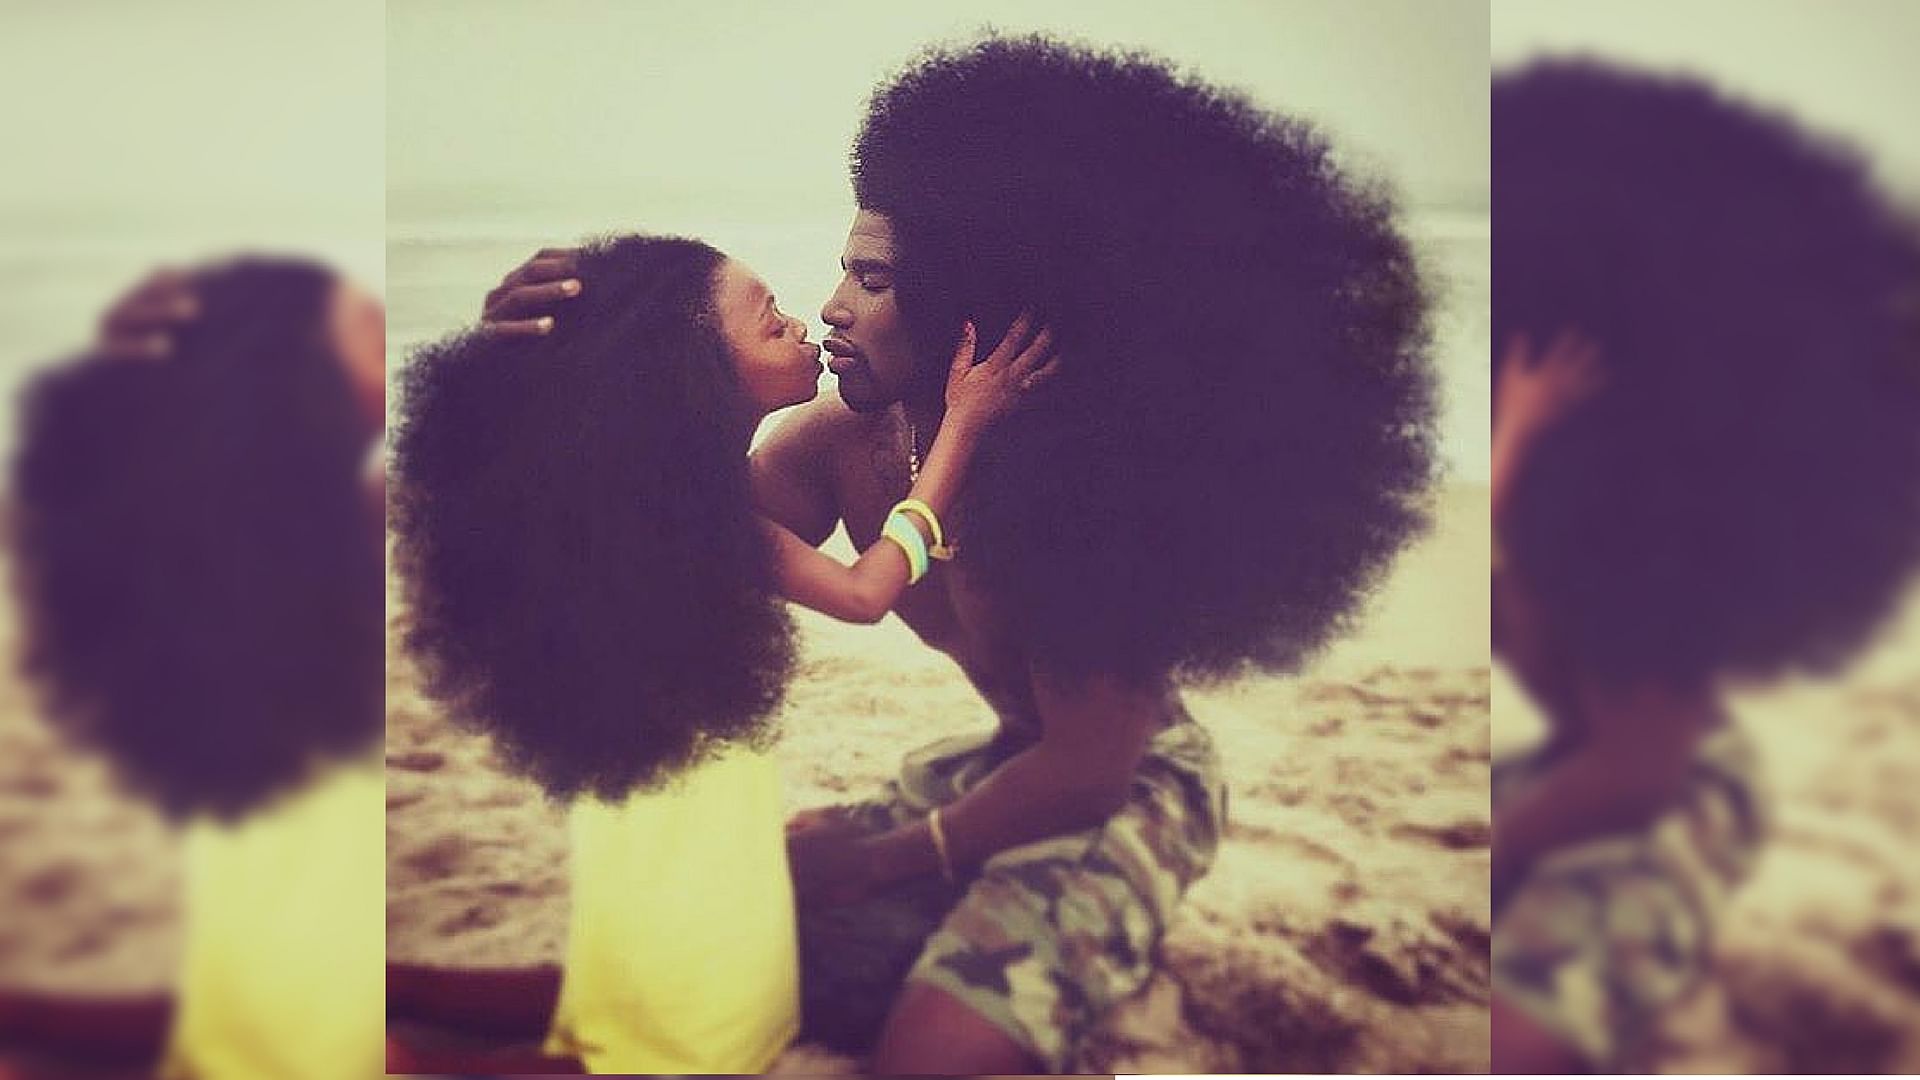 A couple of regular Afro-deities. (Photo: Instagram/<a href="https://www.instagram.com/bennyharlem/">Benny Harlem</a>)